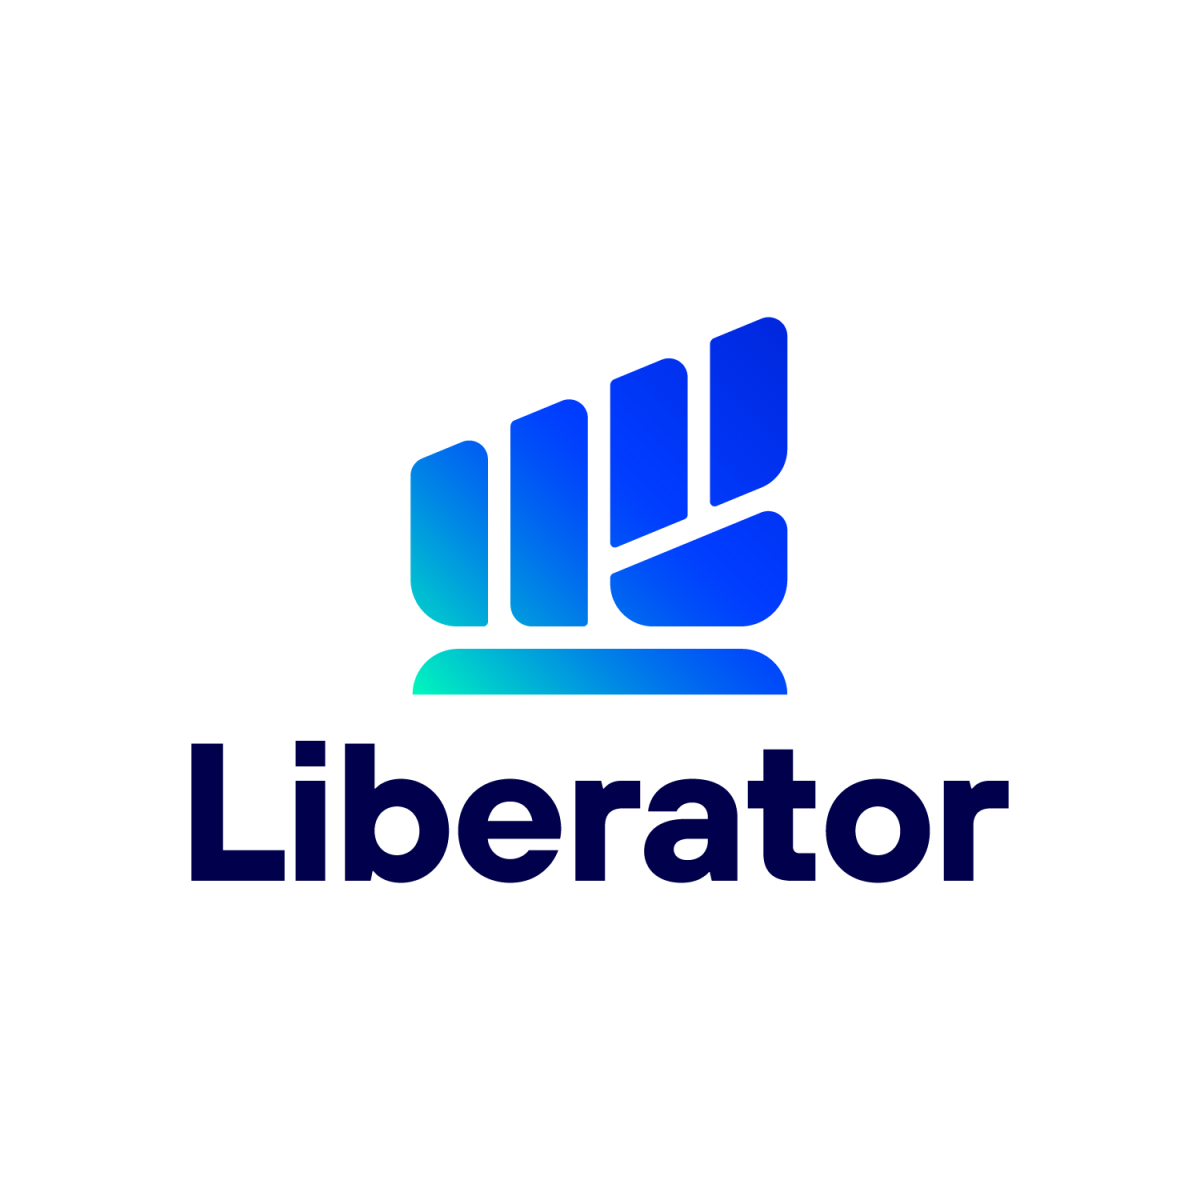 "LIBERATOR" เผยความสำเร็จแบบก้าวกระโดด ดึงดูดนักลงทุนใหม่ได้เกินคาด! ด้วย Community ที่หลากหลาย พร้อมเป้าหมายใหญ่สู่การเป็น Super App!